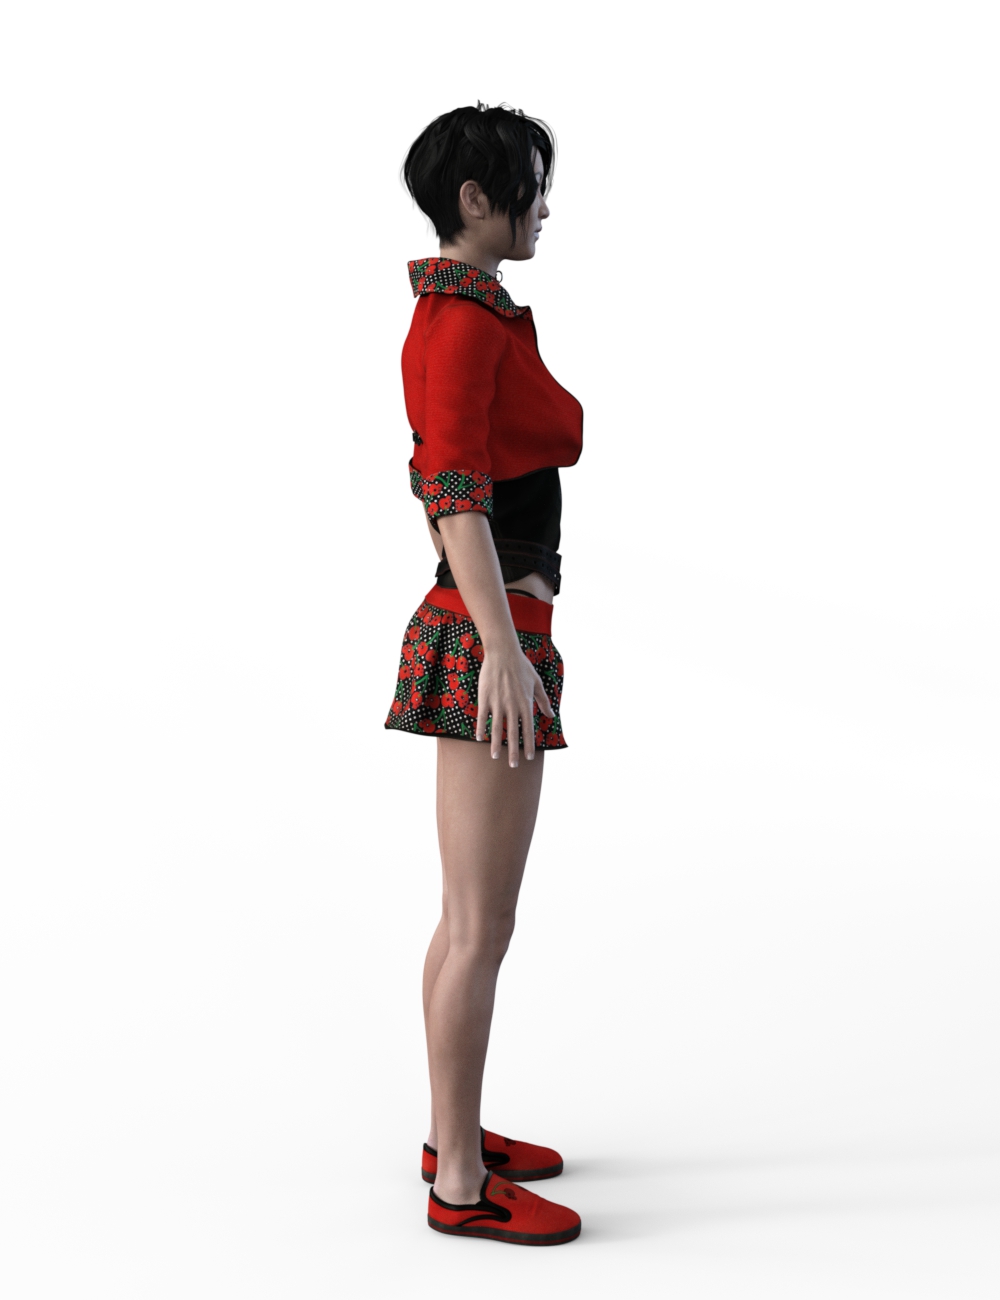 FBX- Mei Lin Cute Punk Outfit by: Paleo, 3D Models by Daz 3D